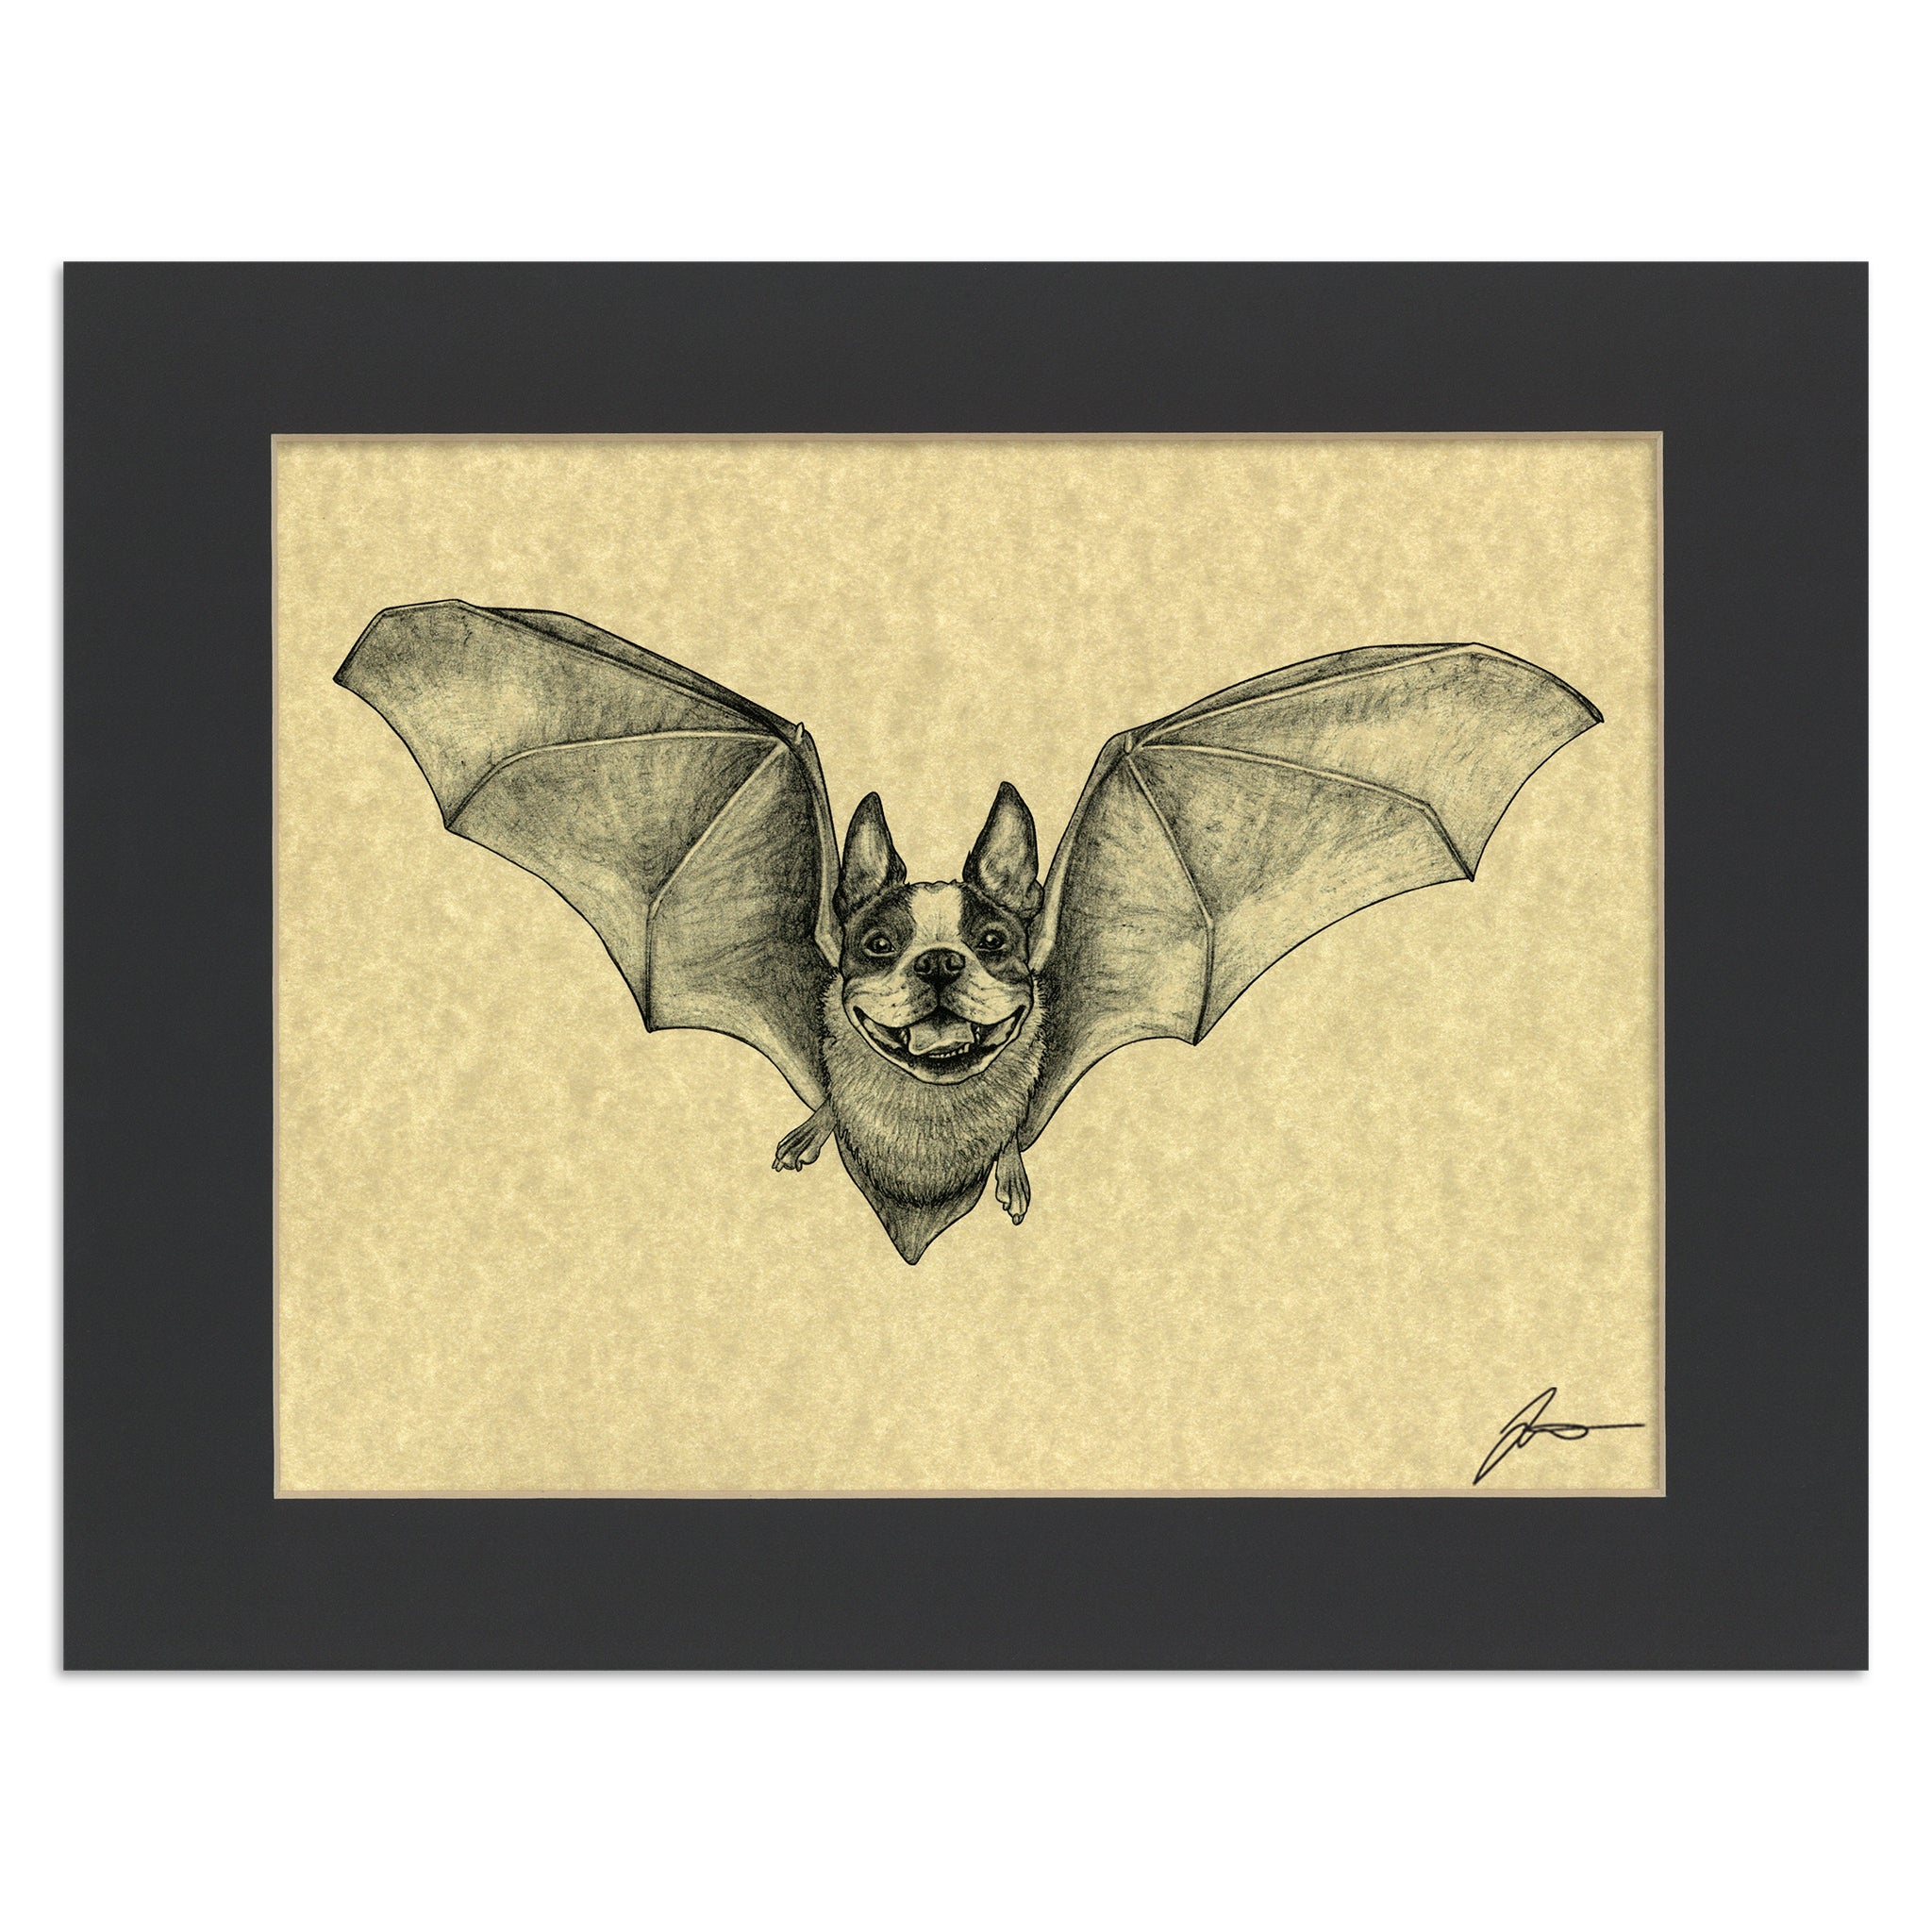 Batson Terrier | Boston Terrier + Bat Hybrid Animal | 11x14" Parchment Print